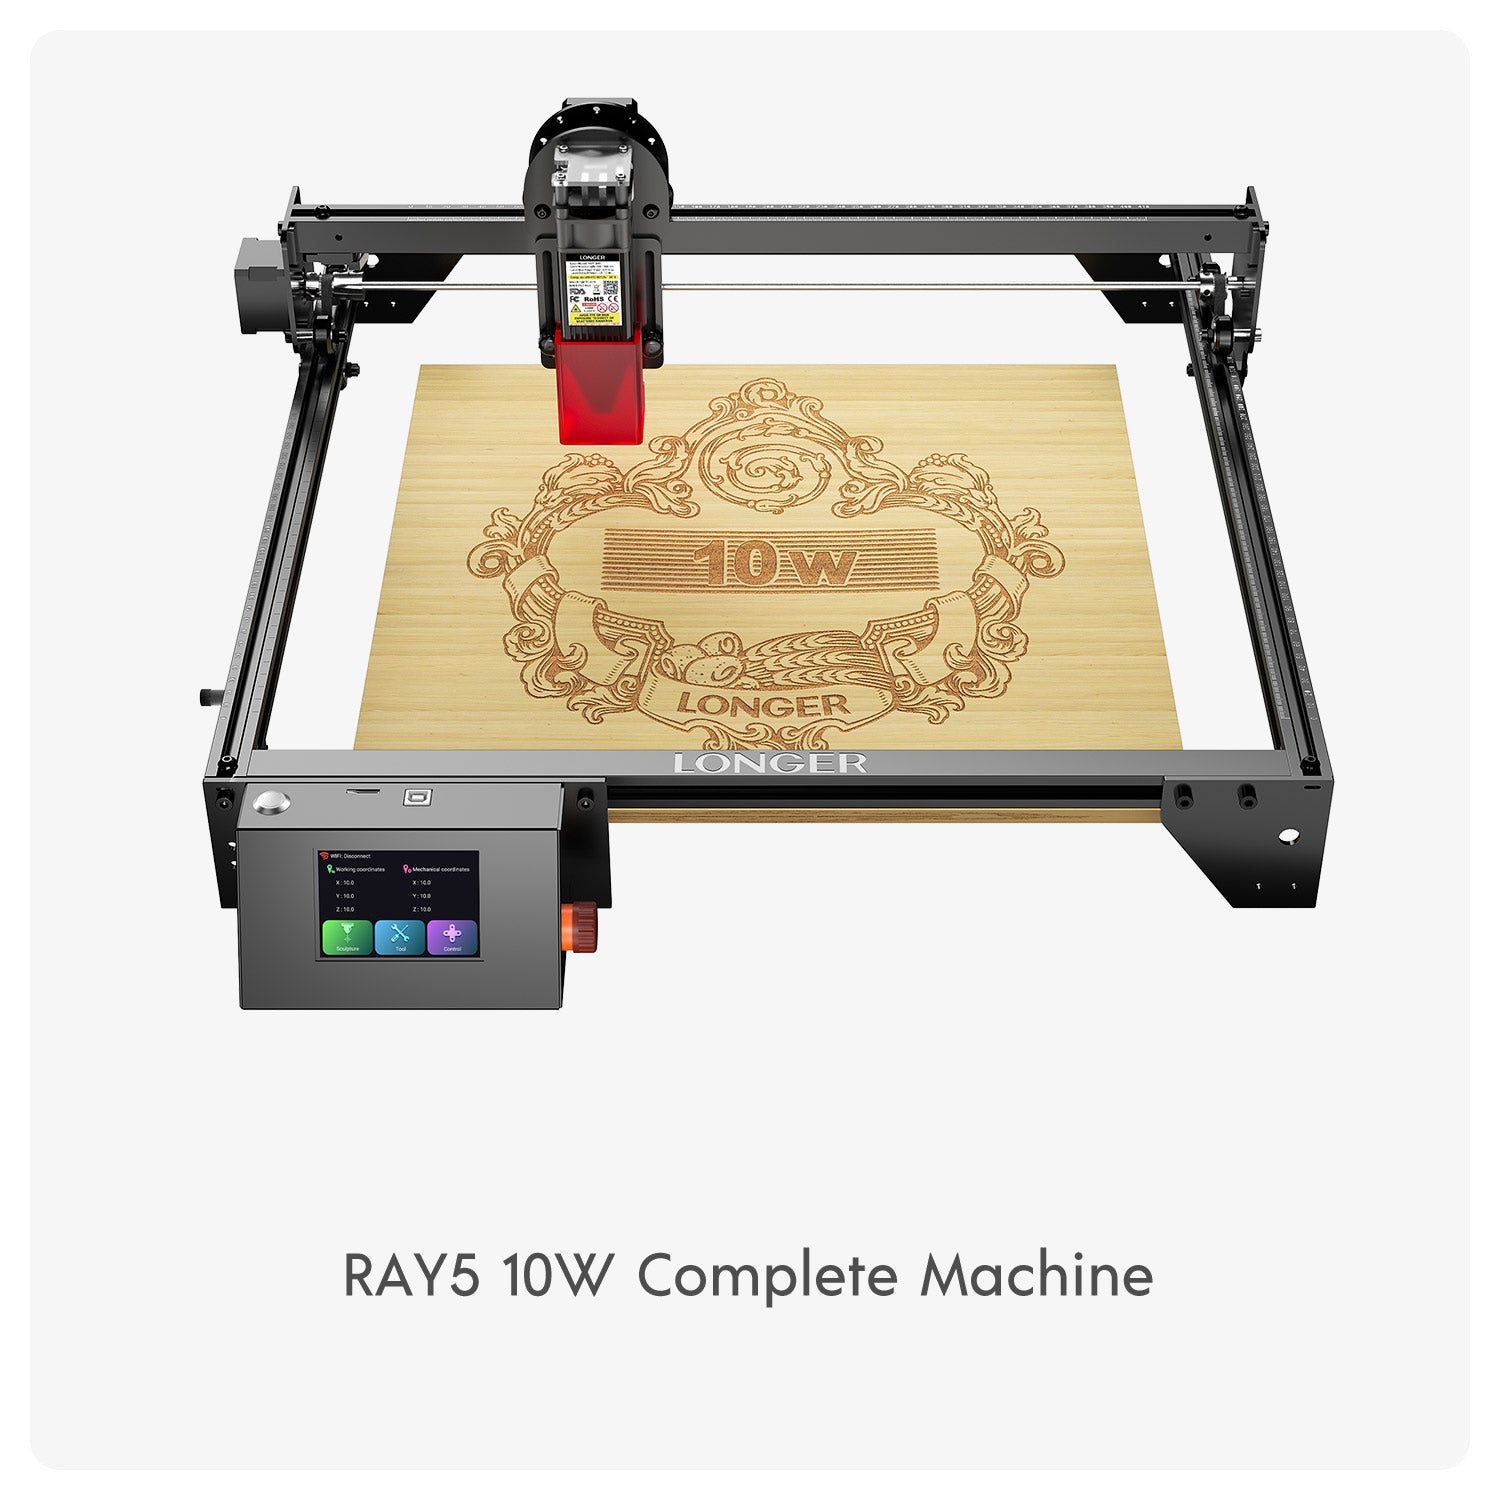 Longer RAY5 10W Laser Engraver(10-12W Output Power)